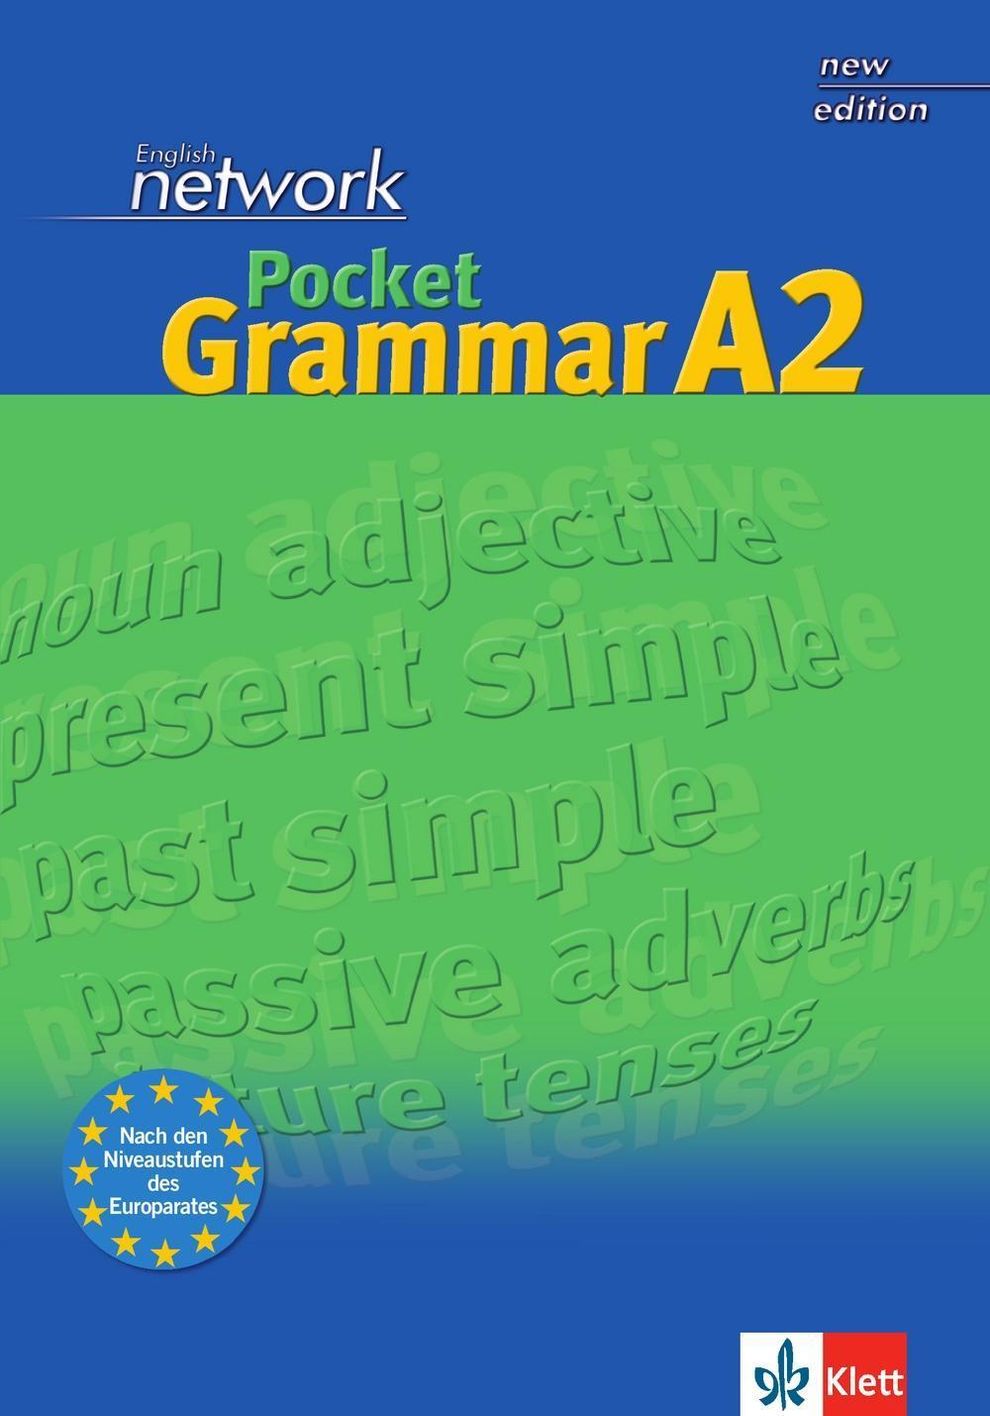 English Network Pocket: Grammar A2 Buch bei Weltbild.ch bestellen